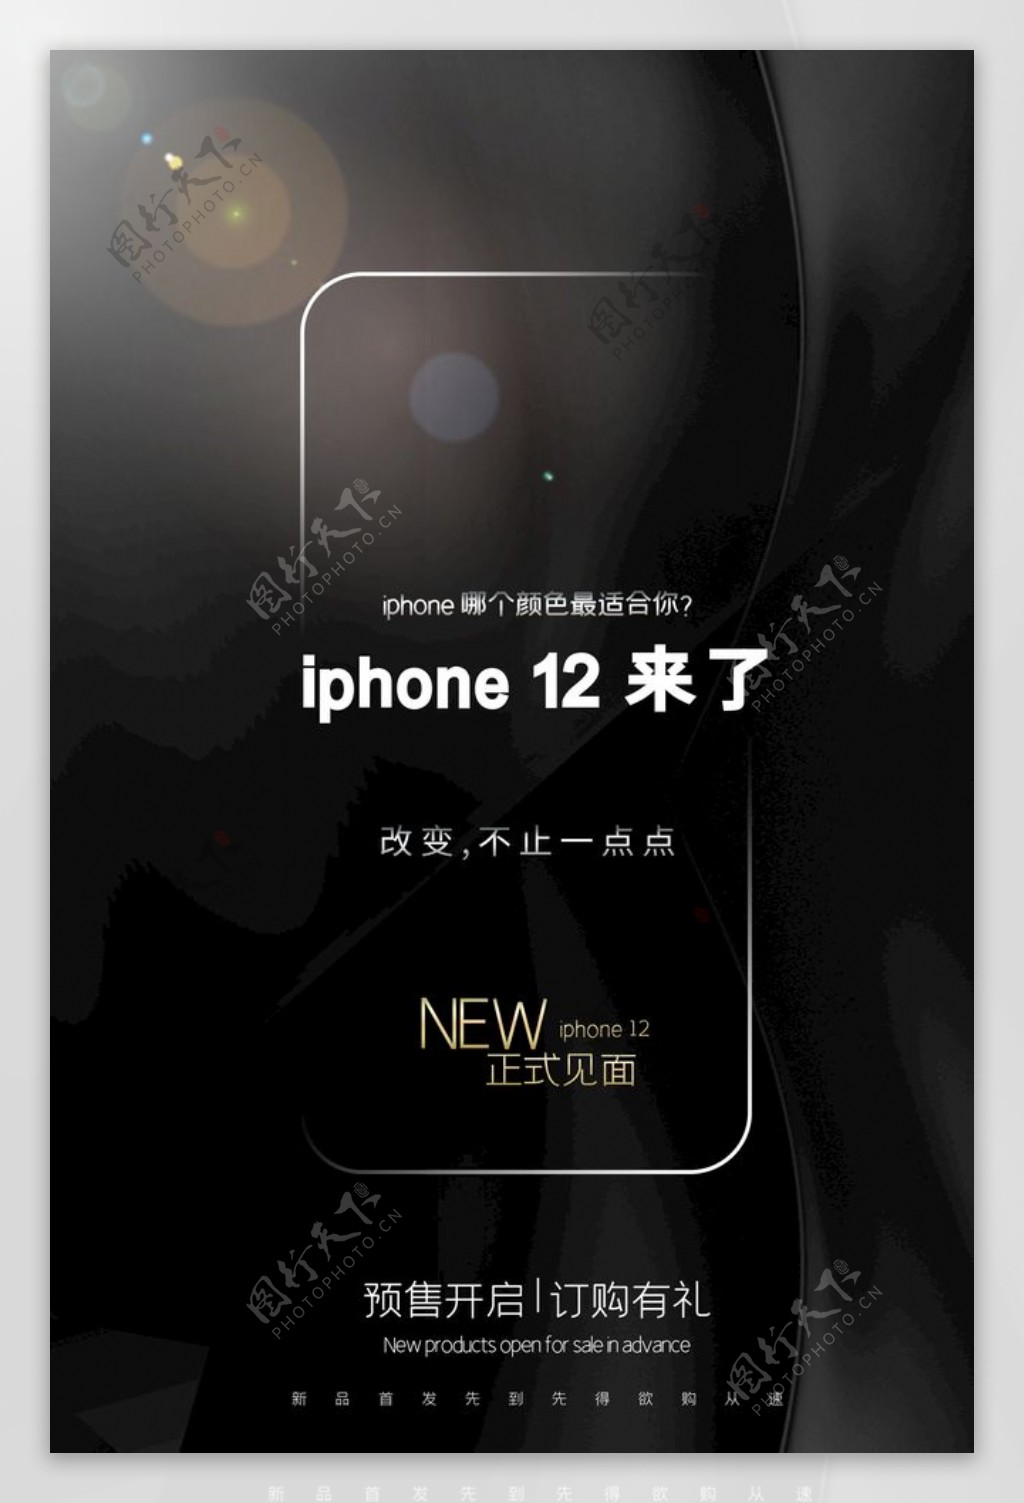 iphone12苹果图片